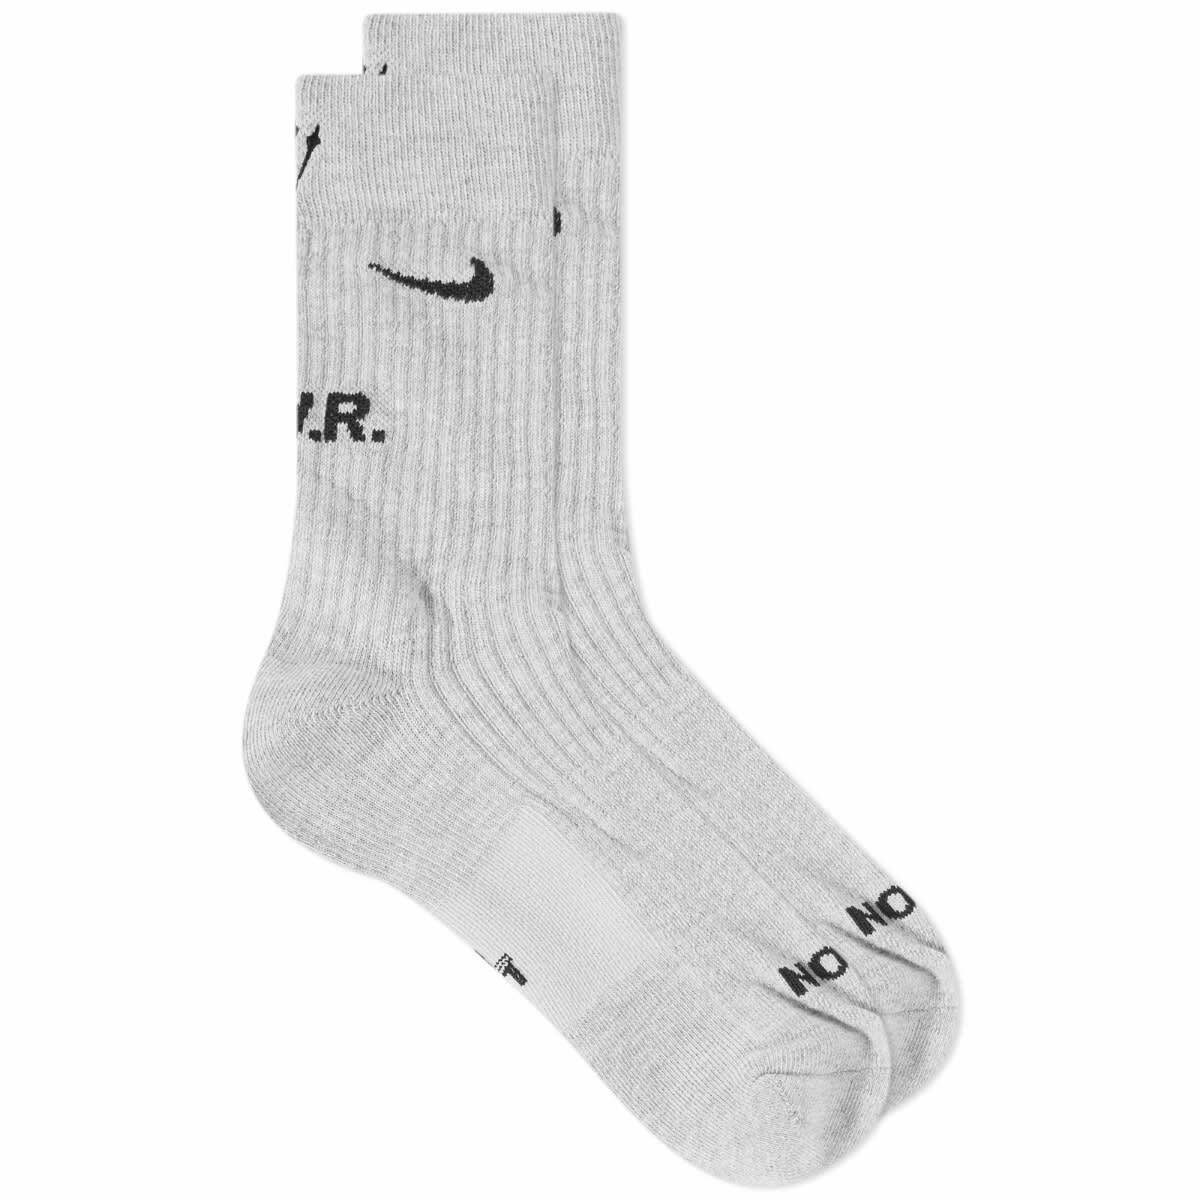 Nike x NOCTA Socks - 3 Pack in Grey Nike